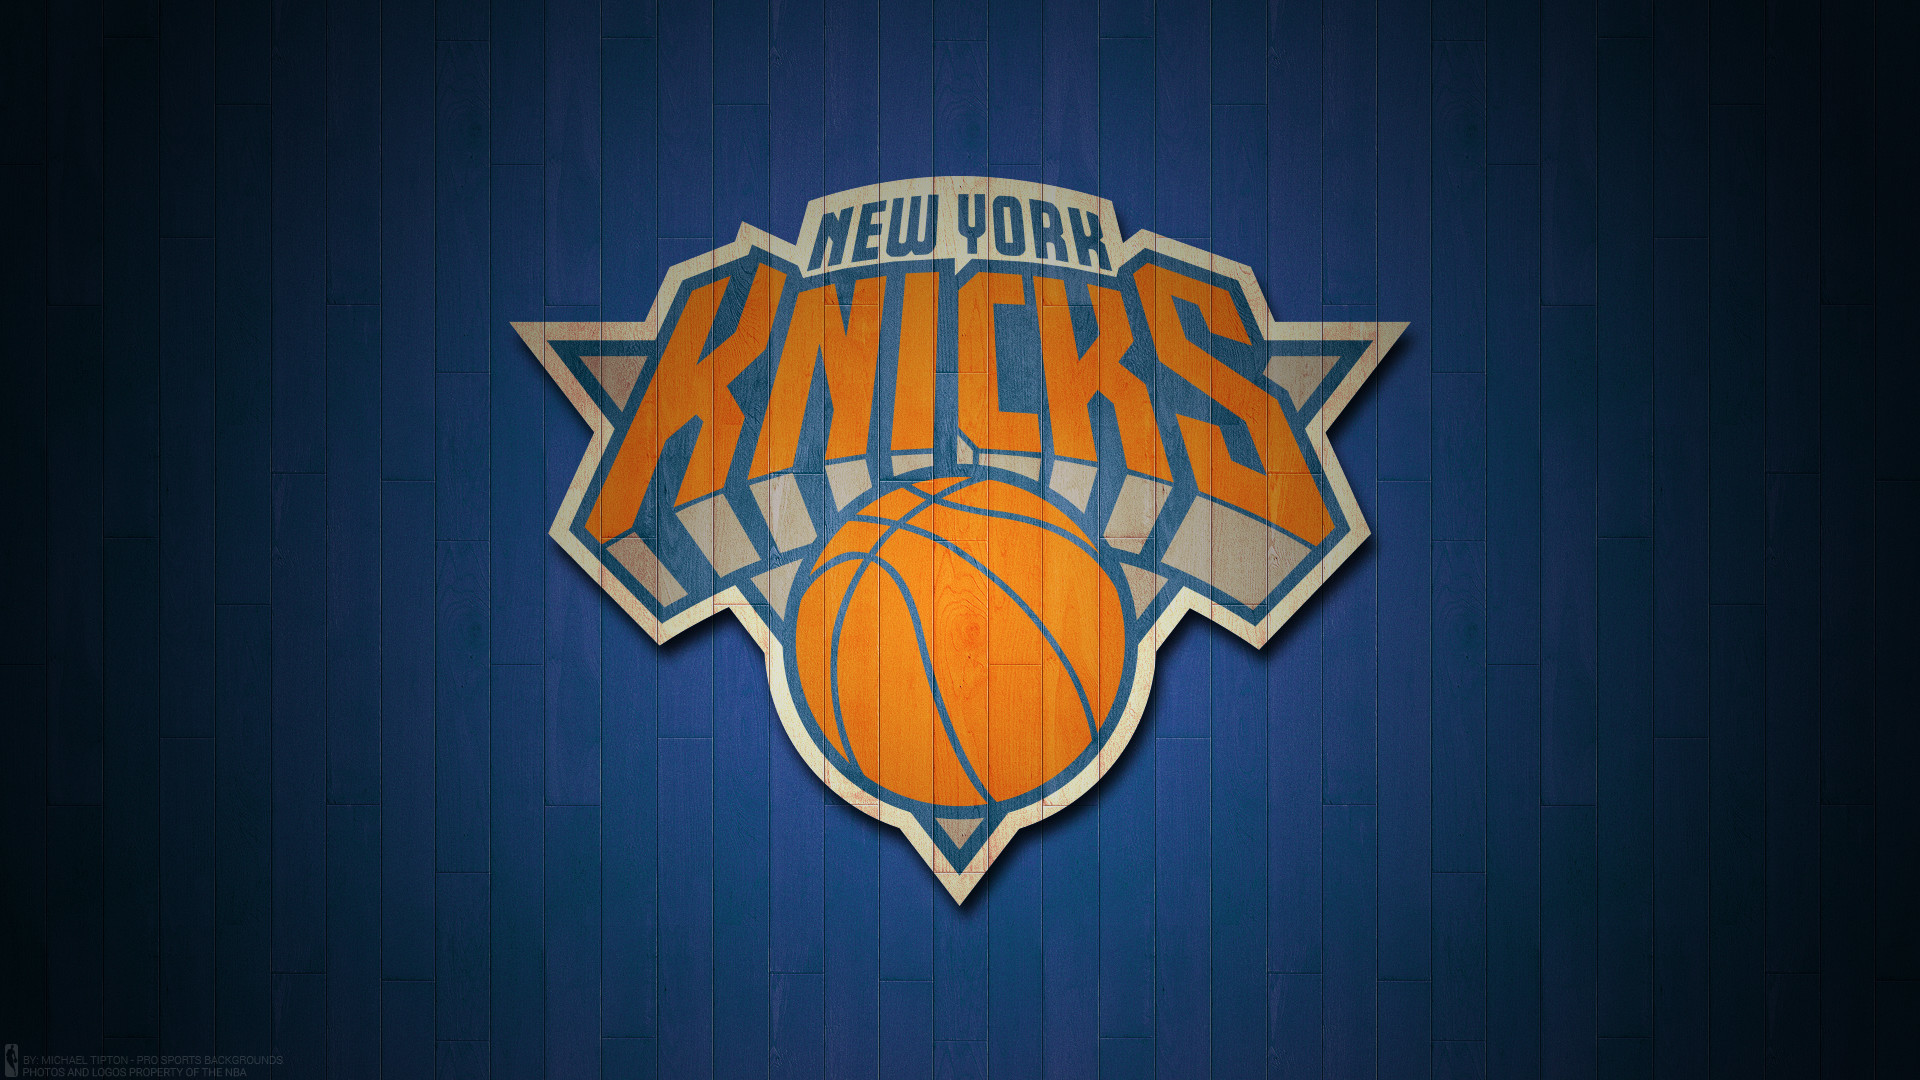 1920x1080  New York Knicks 2017 nba basketball team logo hardwood wallpaper  free for mac and desktop